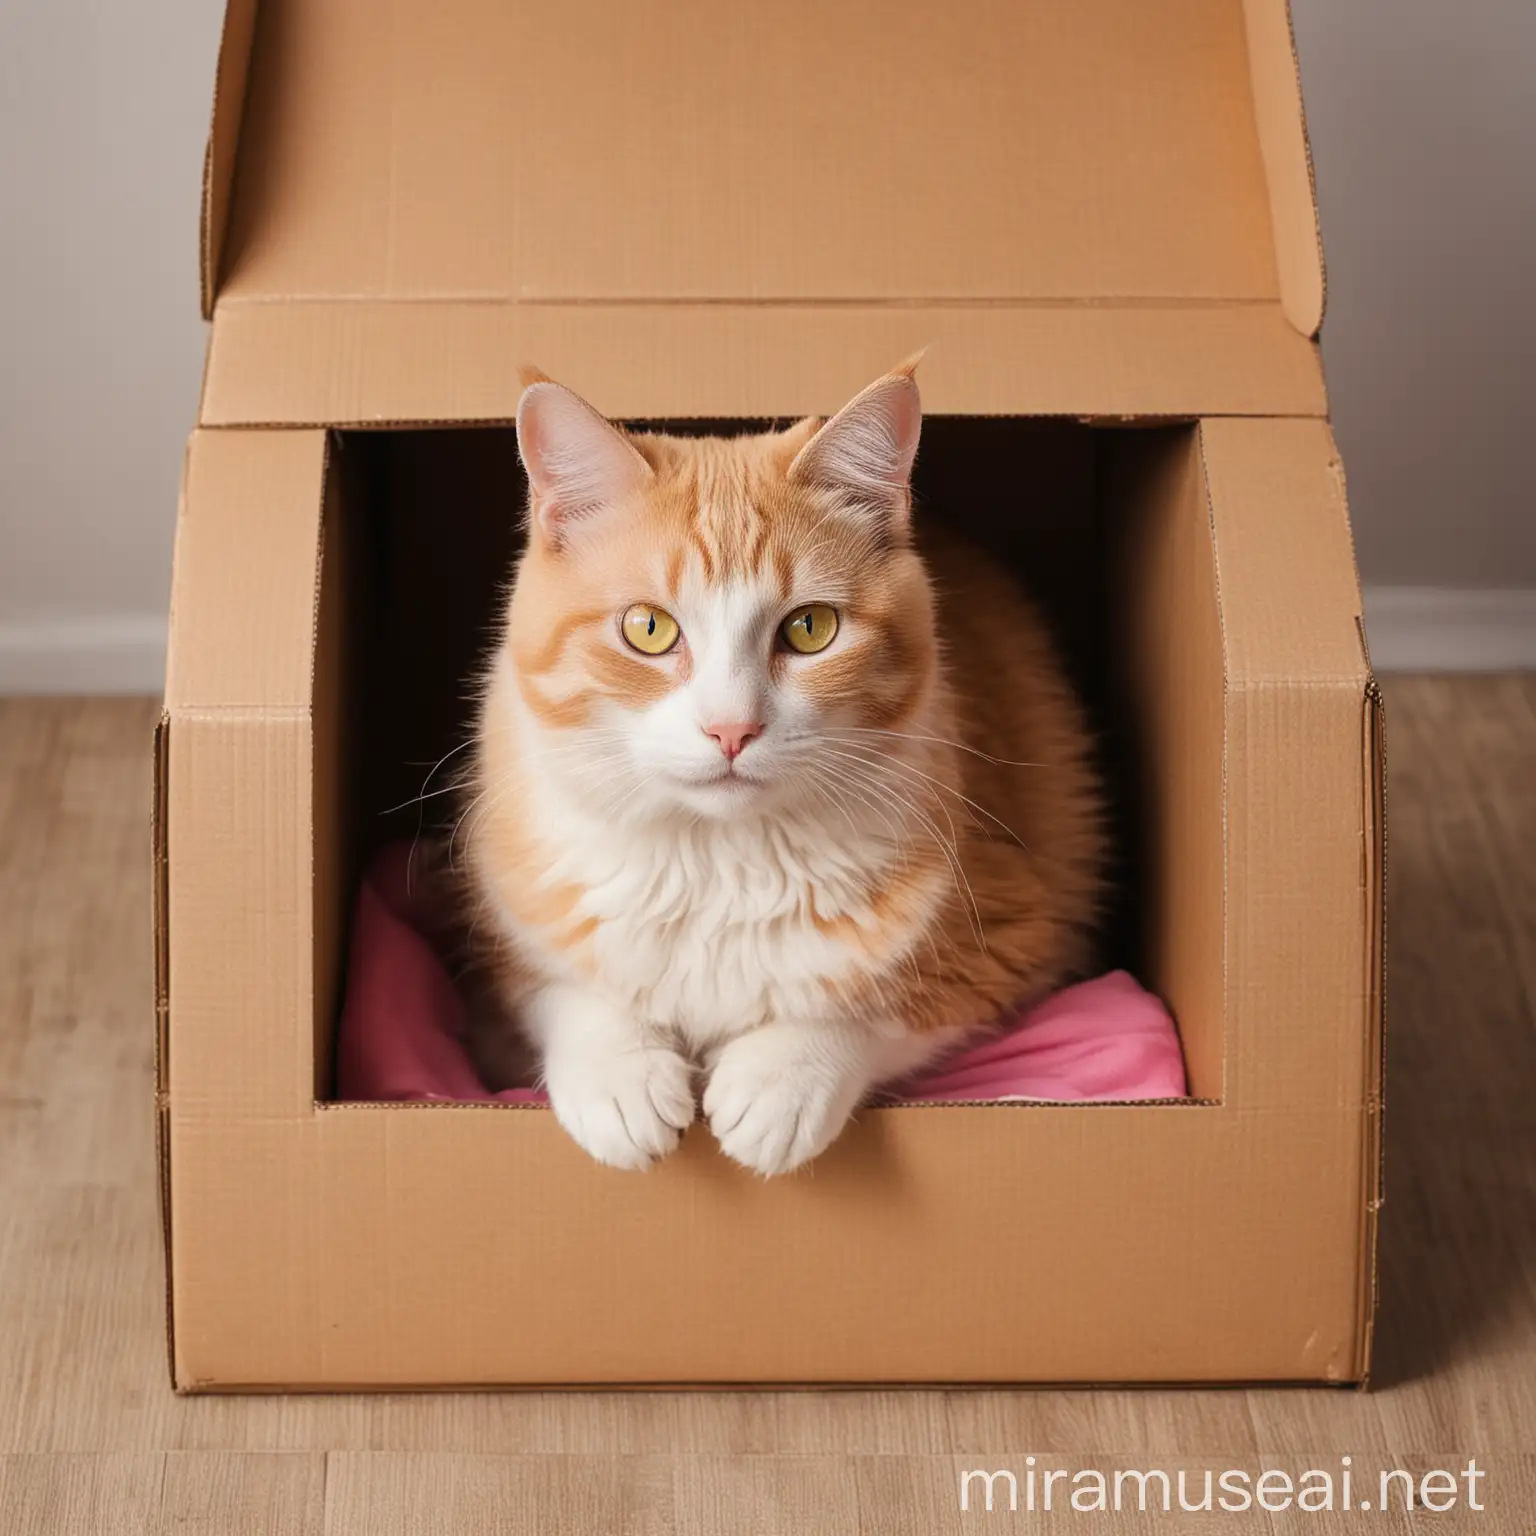 Cat Sitting in Colorful Cardboard Box